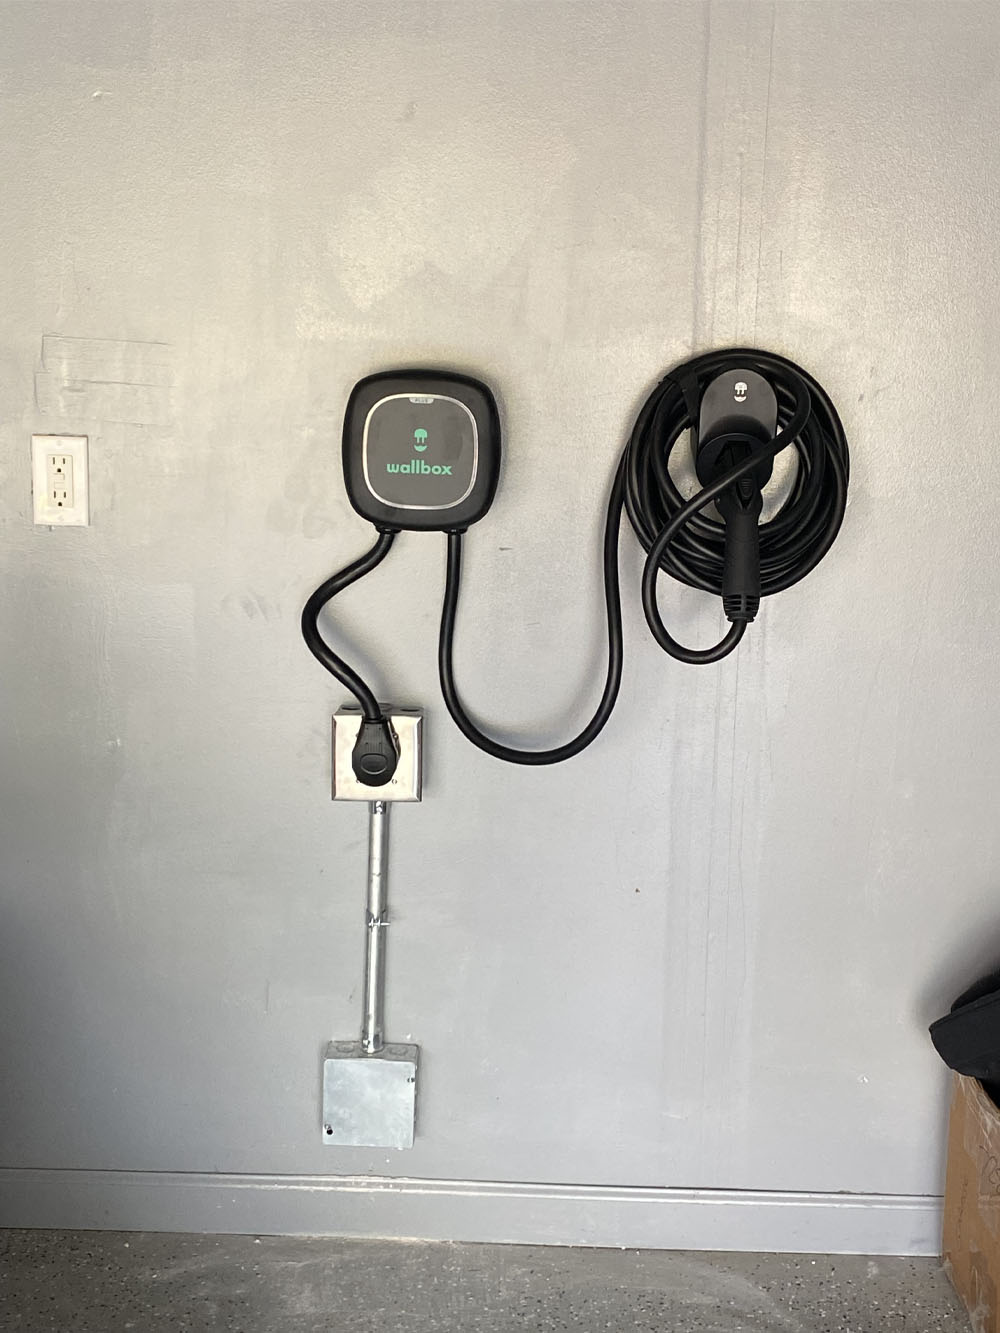 wallbox EV charger install